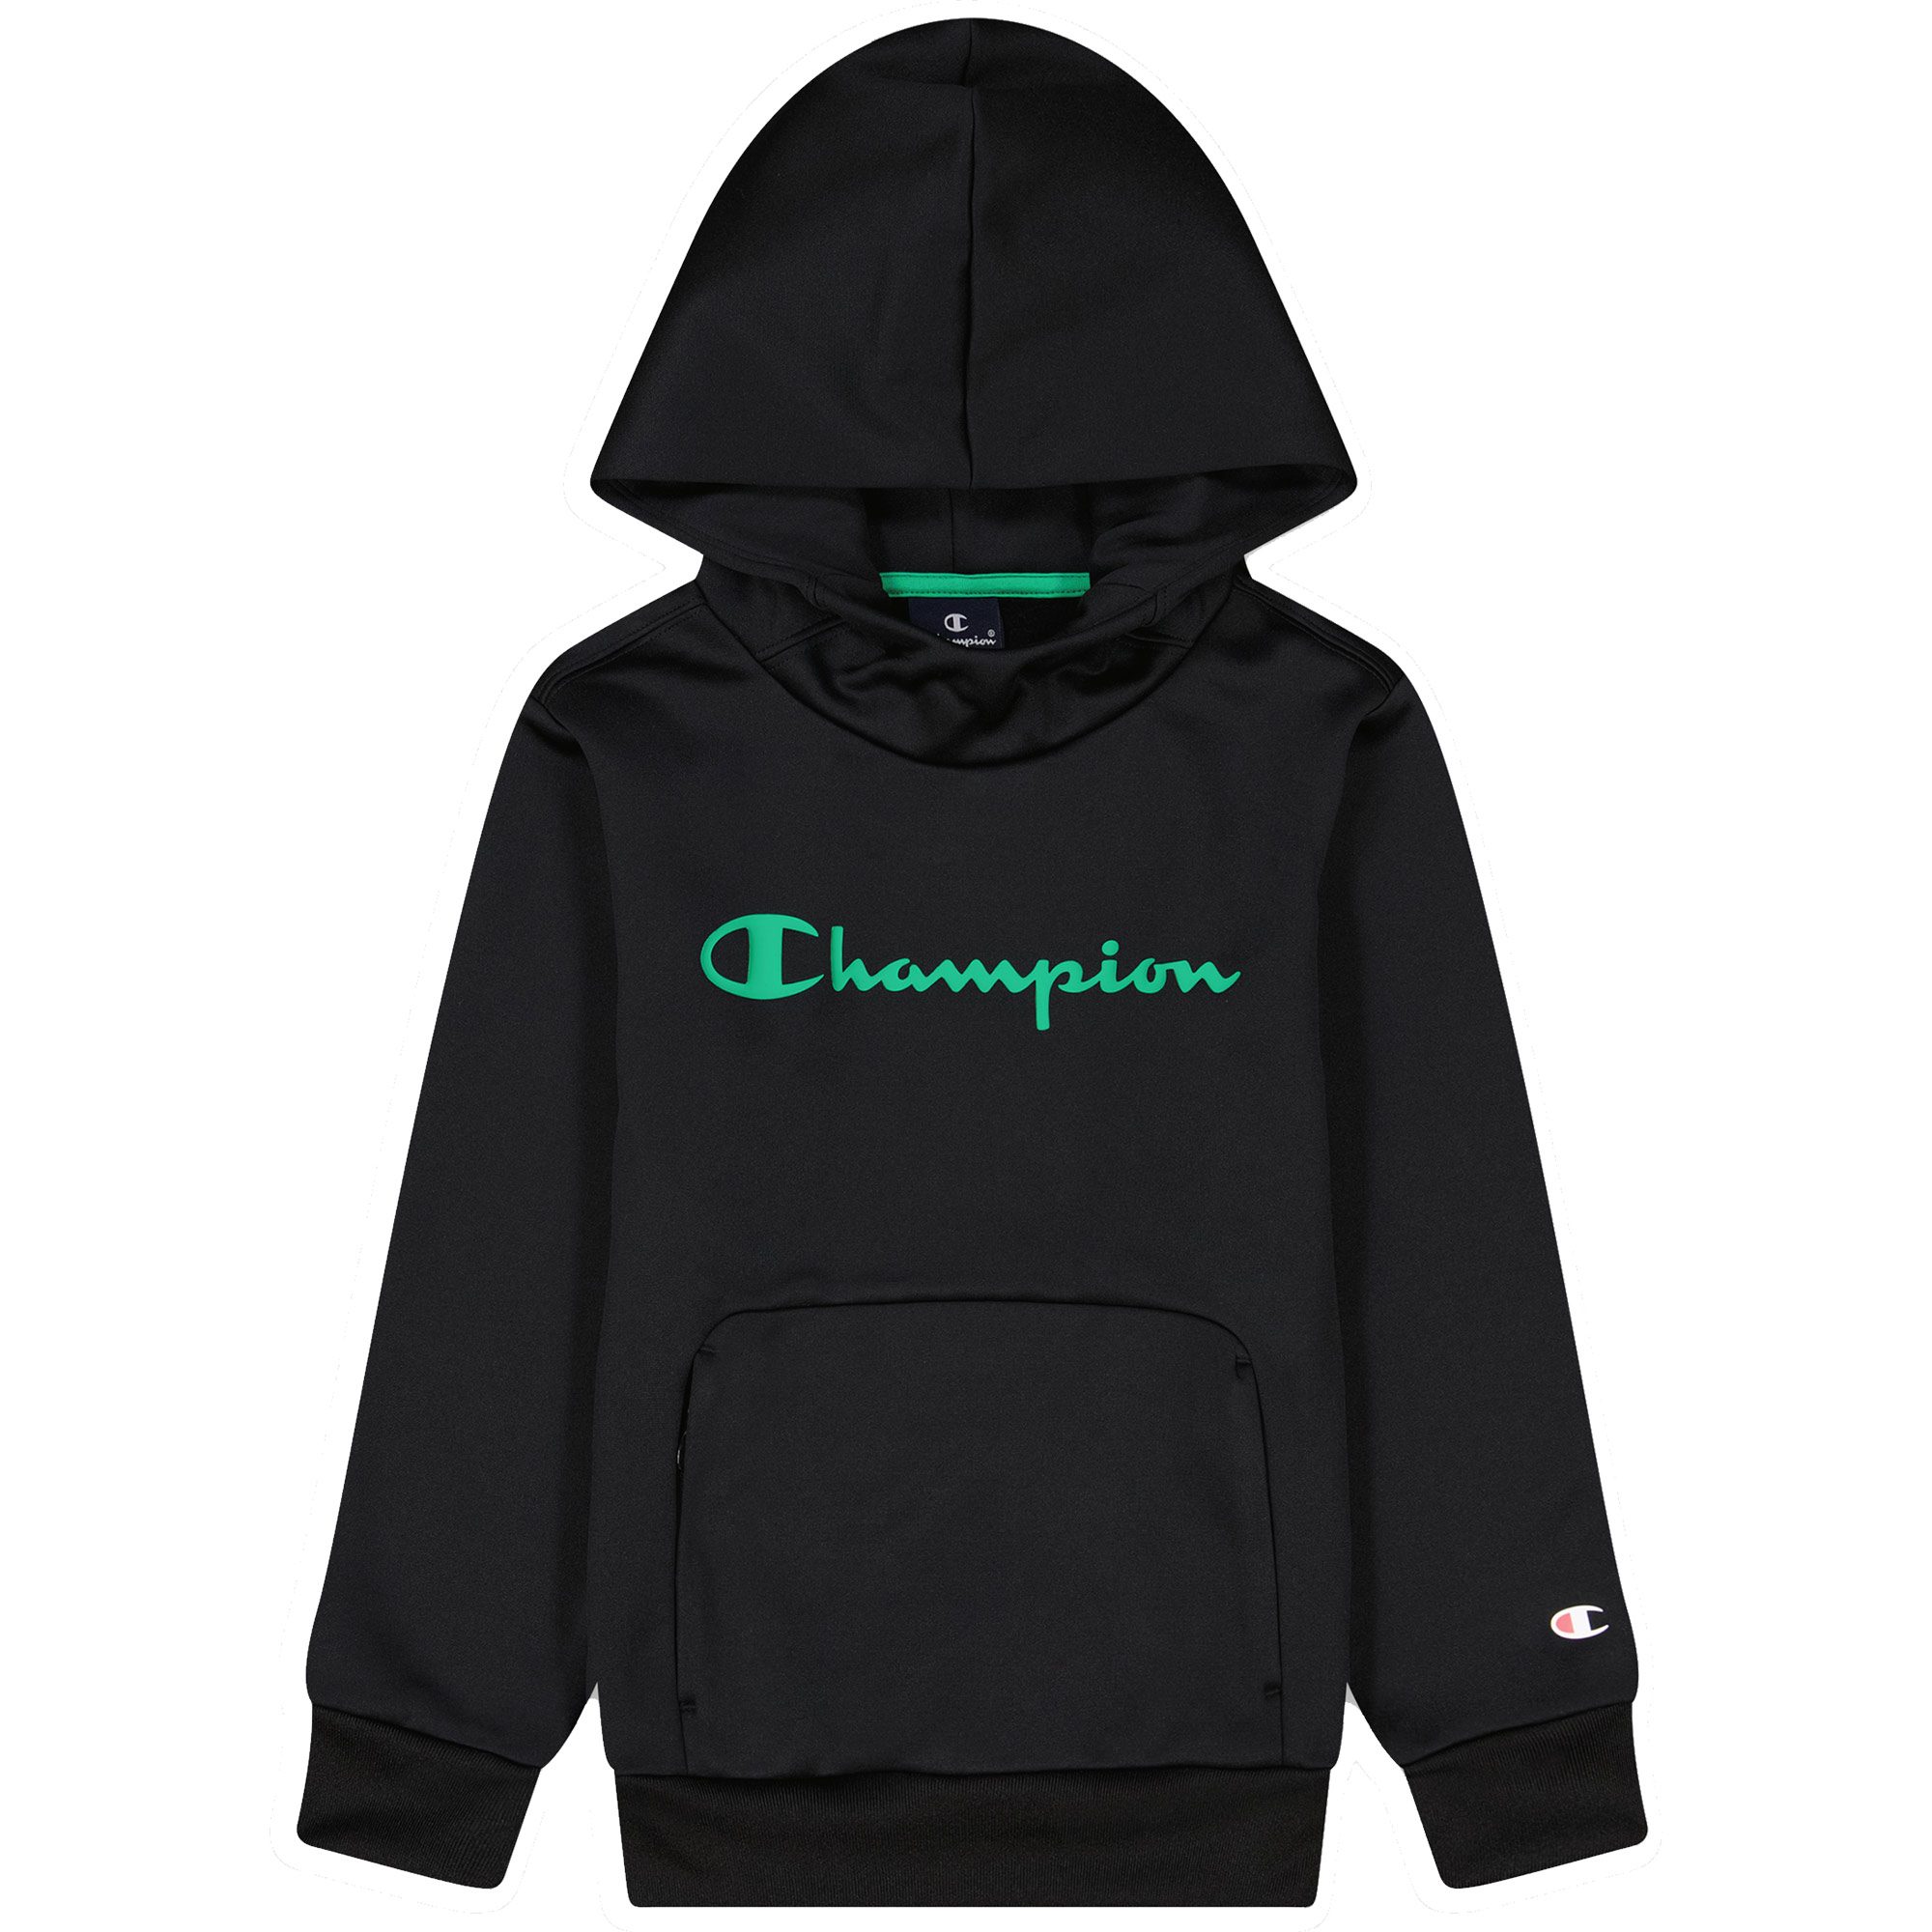 Champion - at black beauty Sport Hooded Shop Bittl Boys Sweatshirt